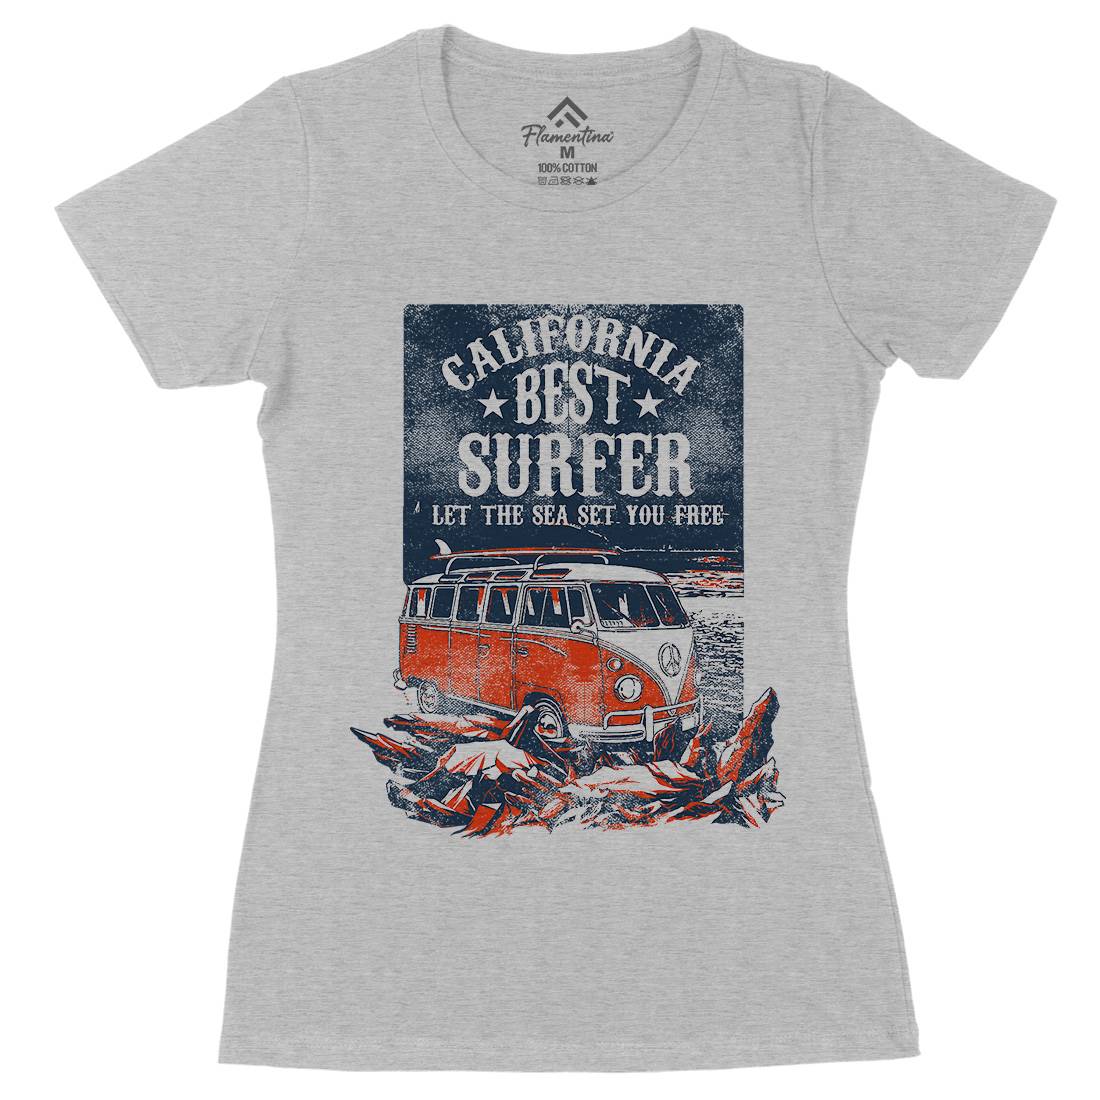 Let The Sea Set You Free Womens Organic Crew Neck T-Shirt Surf C956